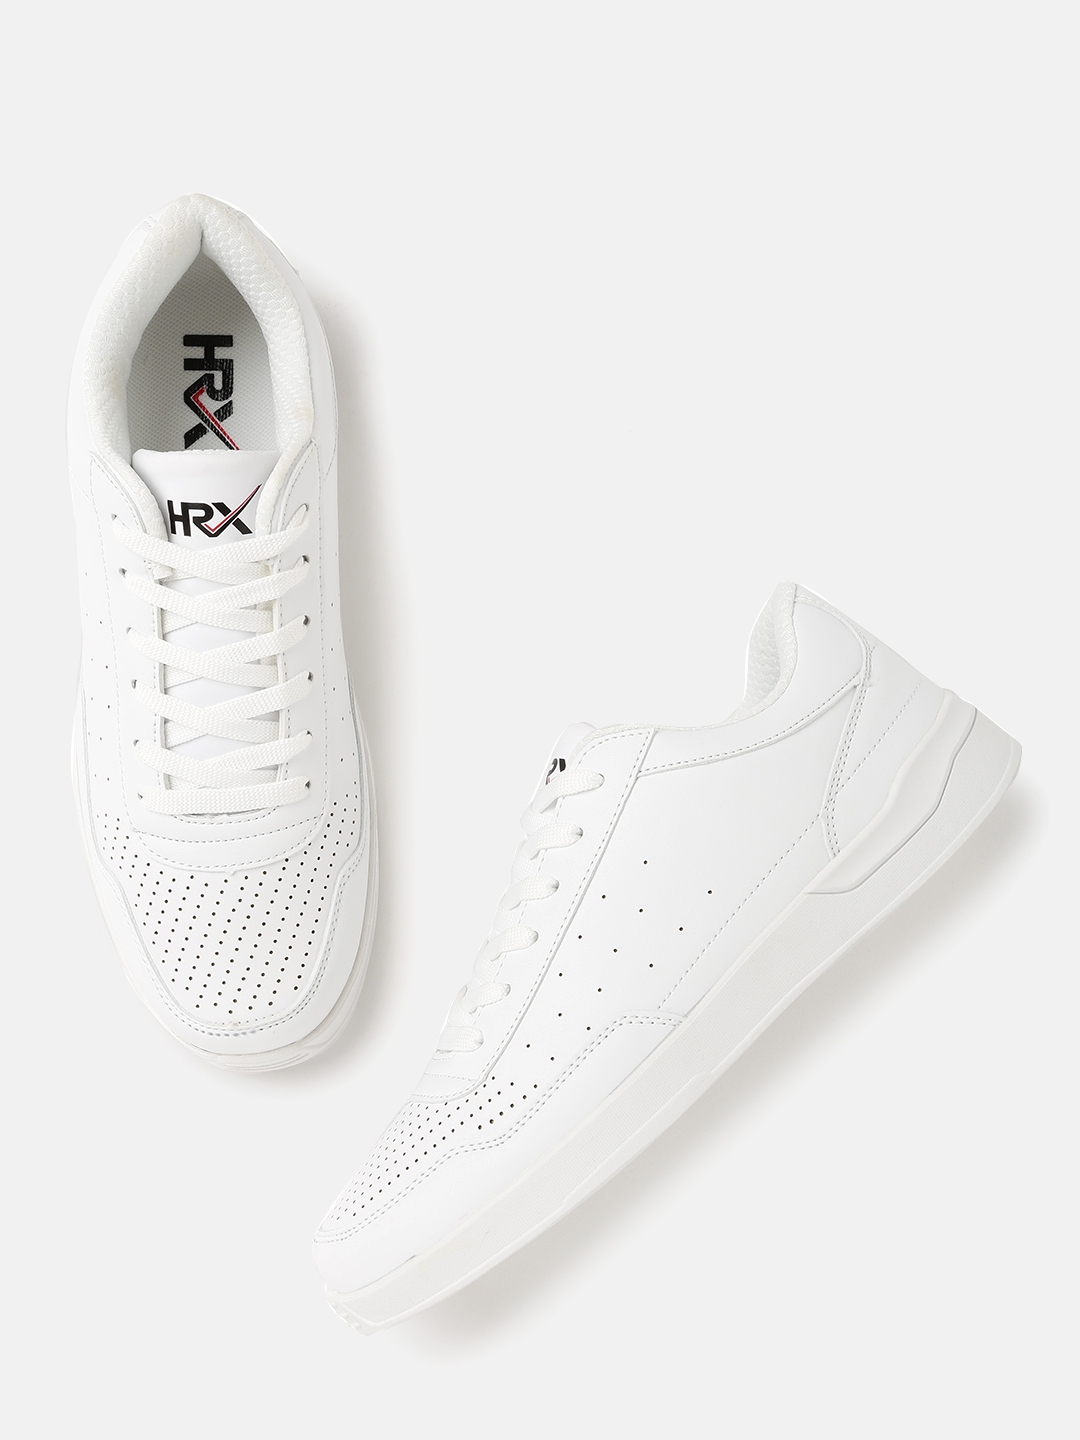 hrx men white sneakers